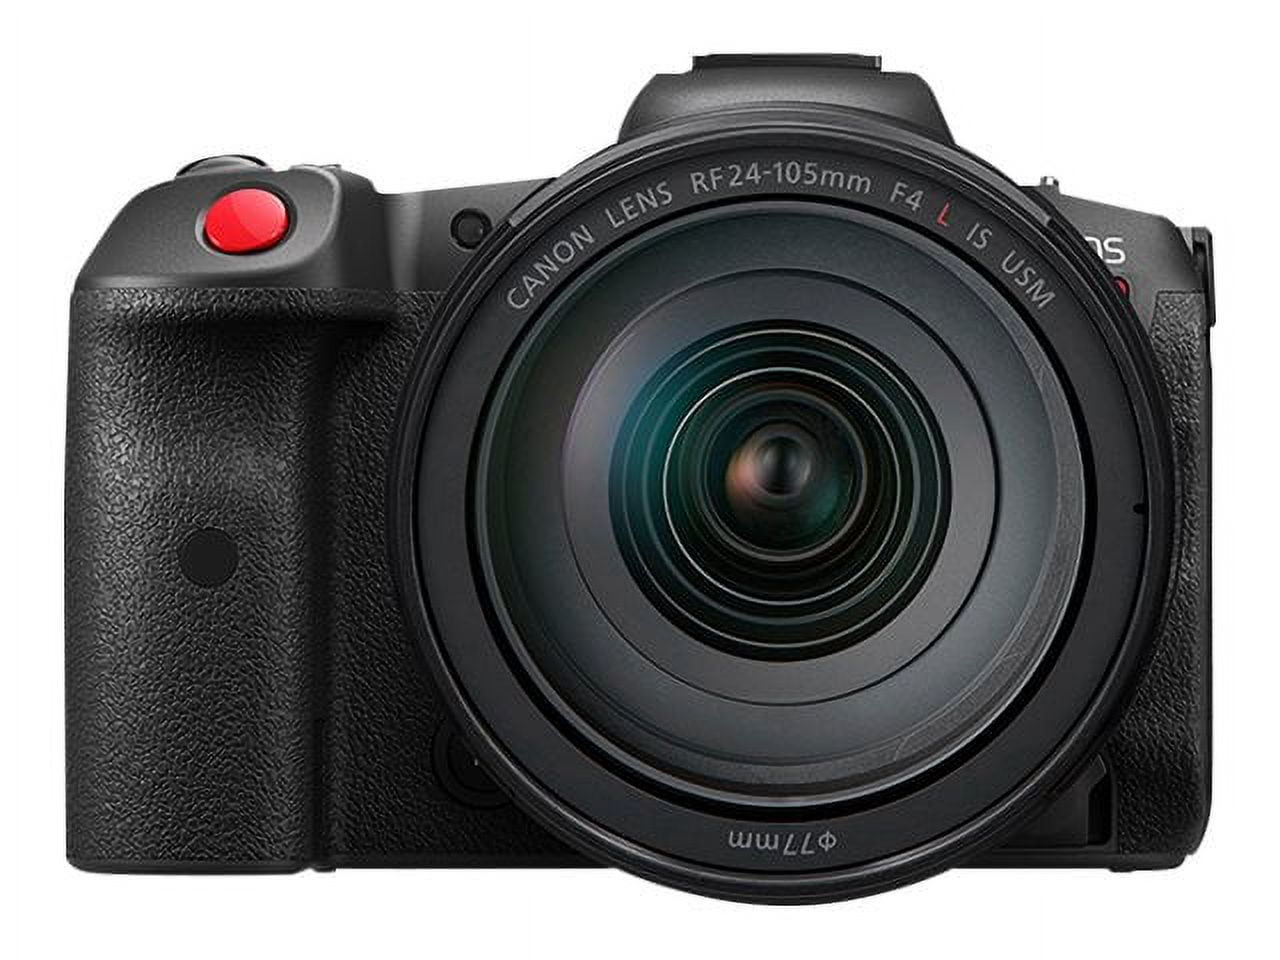 Sony a6400 ILCE-6400M - Digital camera - mirrorless - 24.2 MP - APS-C - 4K  / 30 fps - 7.5x optical zoom E 18-135mm OSS lens - Wi-Fi, NFC, Bluetooth -  black 